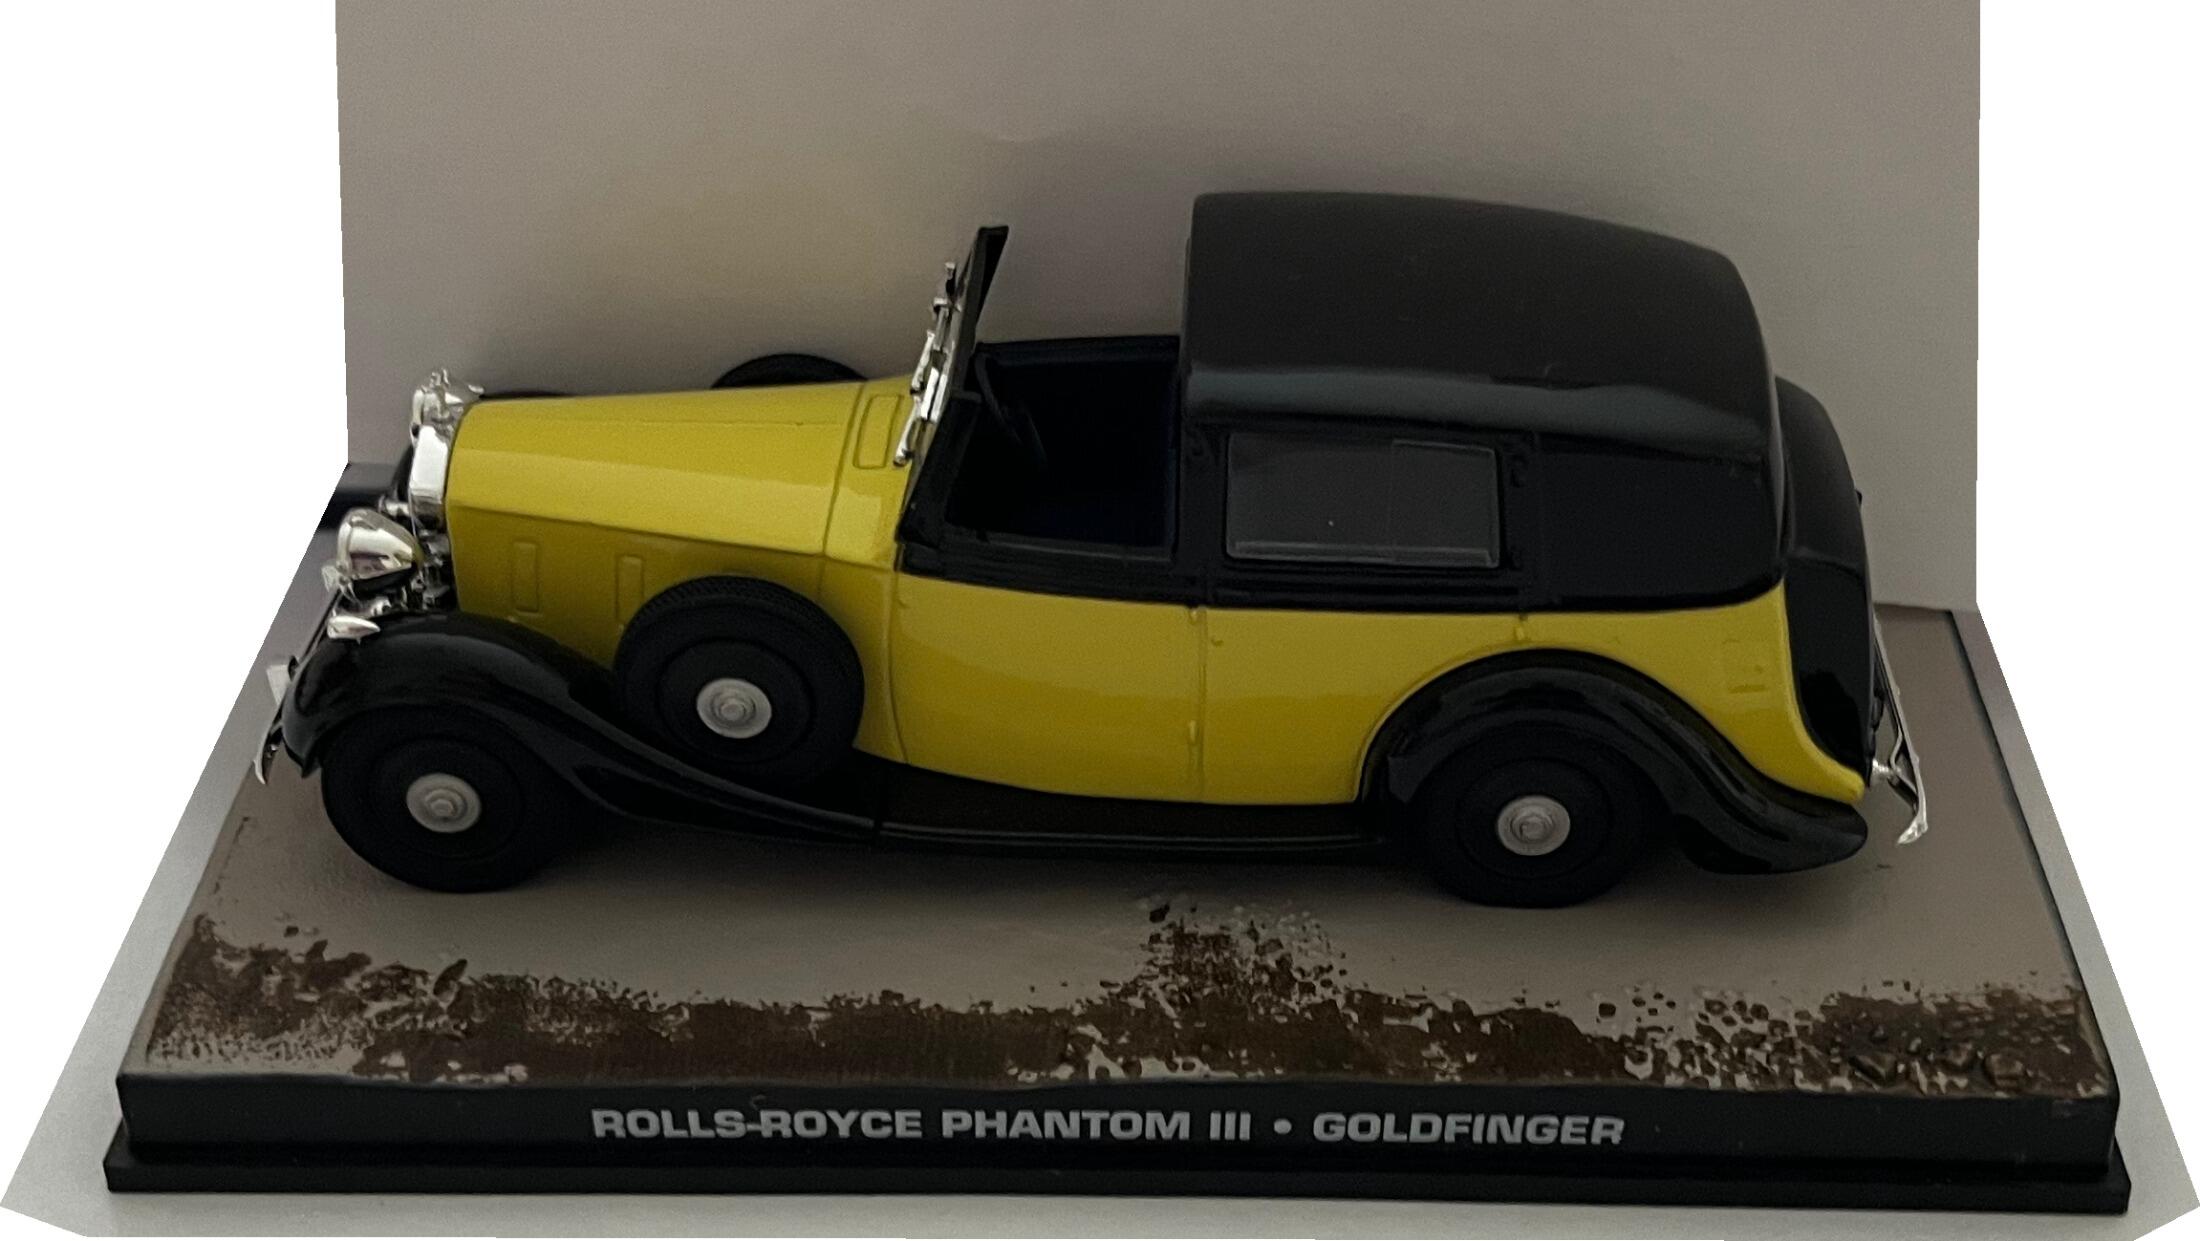 James Bond Rolls Royce Phantom III from Goldfinger, 1:43 scale diecast model 007 classic car, DY097